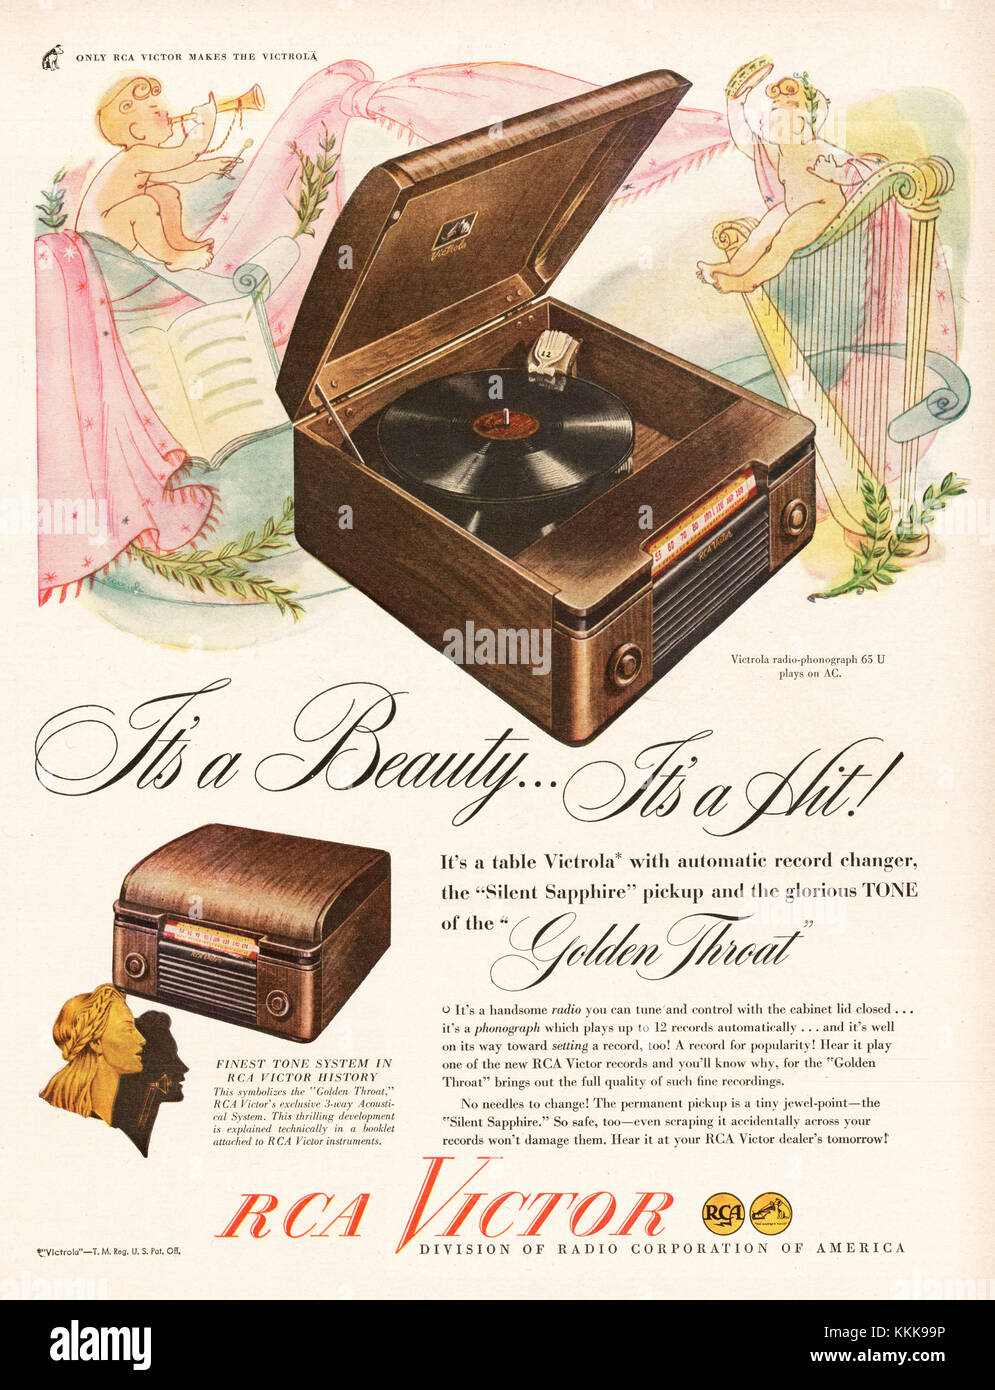 1947 U.S. Magazine RCA Victor Radio and Record Player Advert Stock Photo